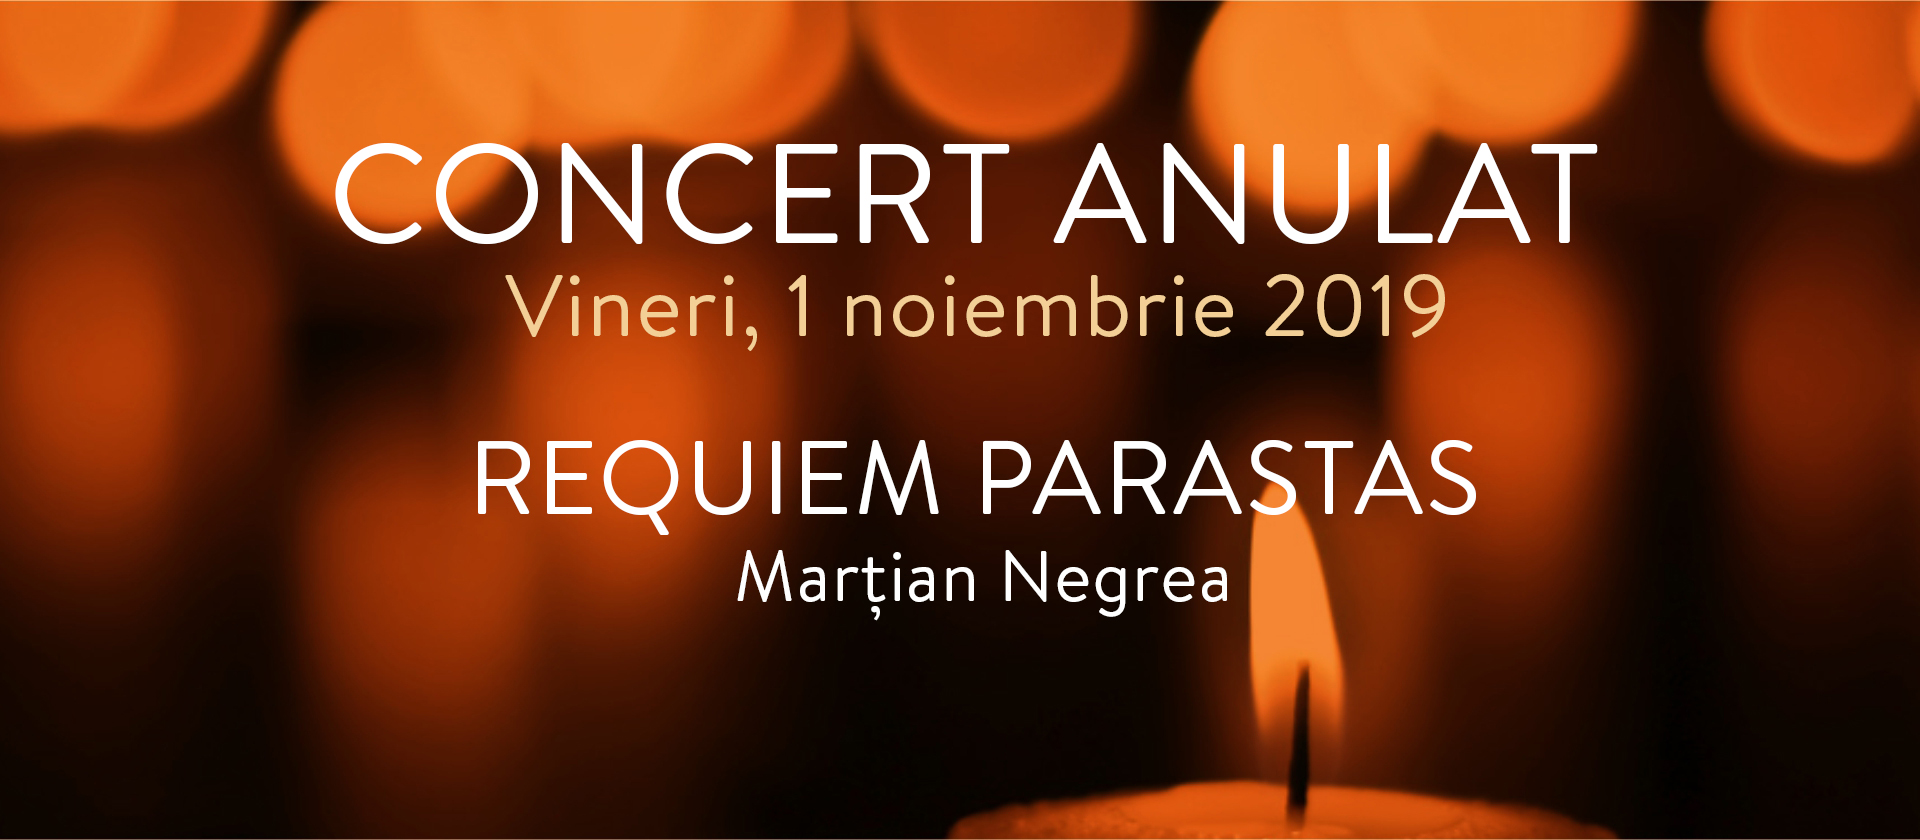 The Concert ”REQUIEM PARASTAS” (Friday, November 1st, 2019), has been canceled